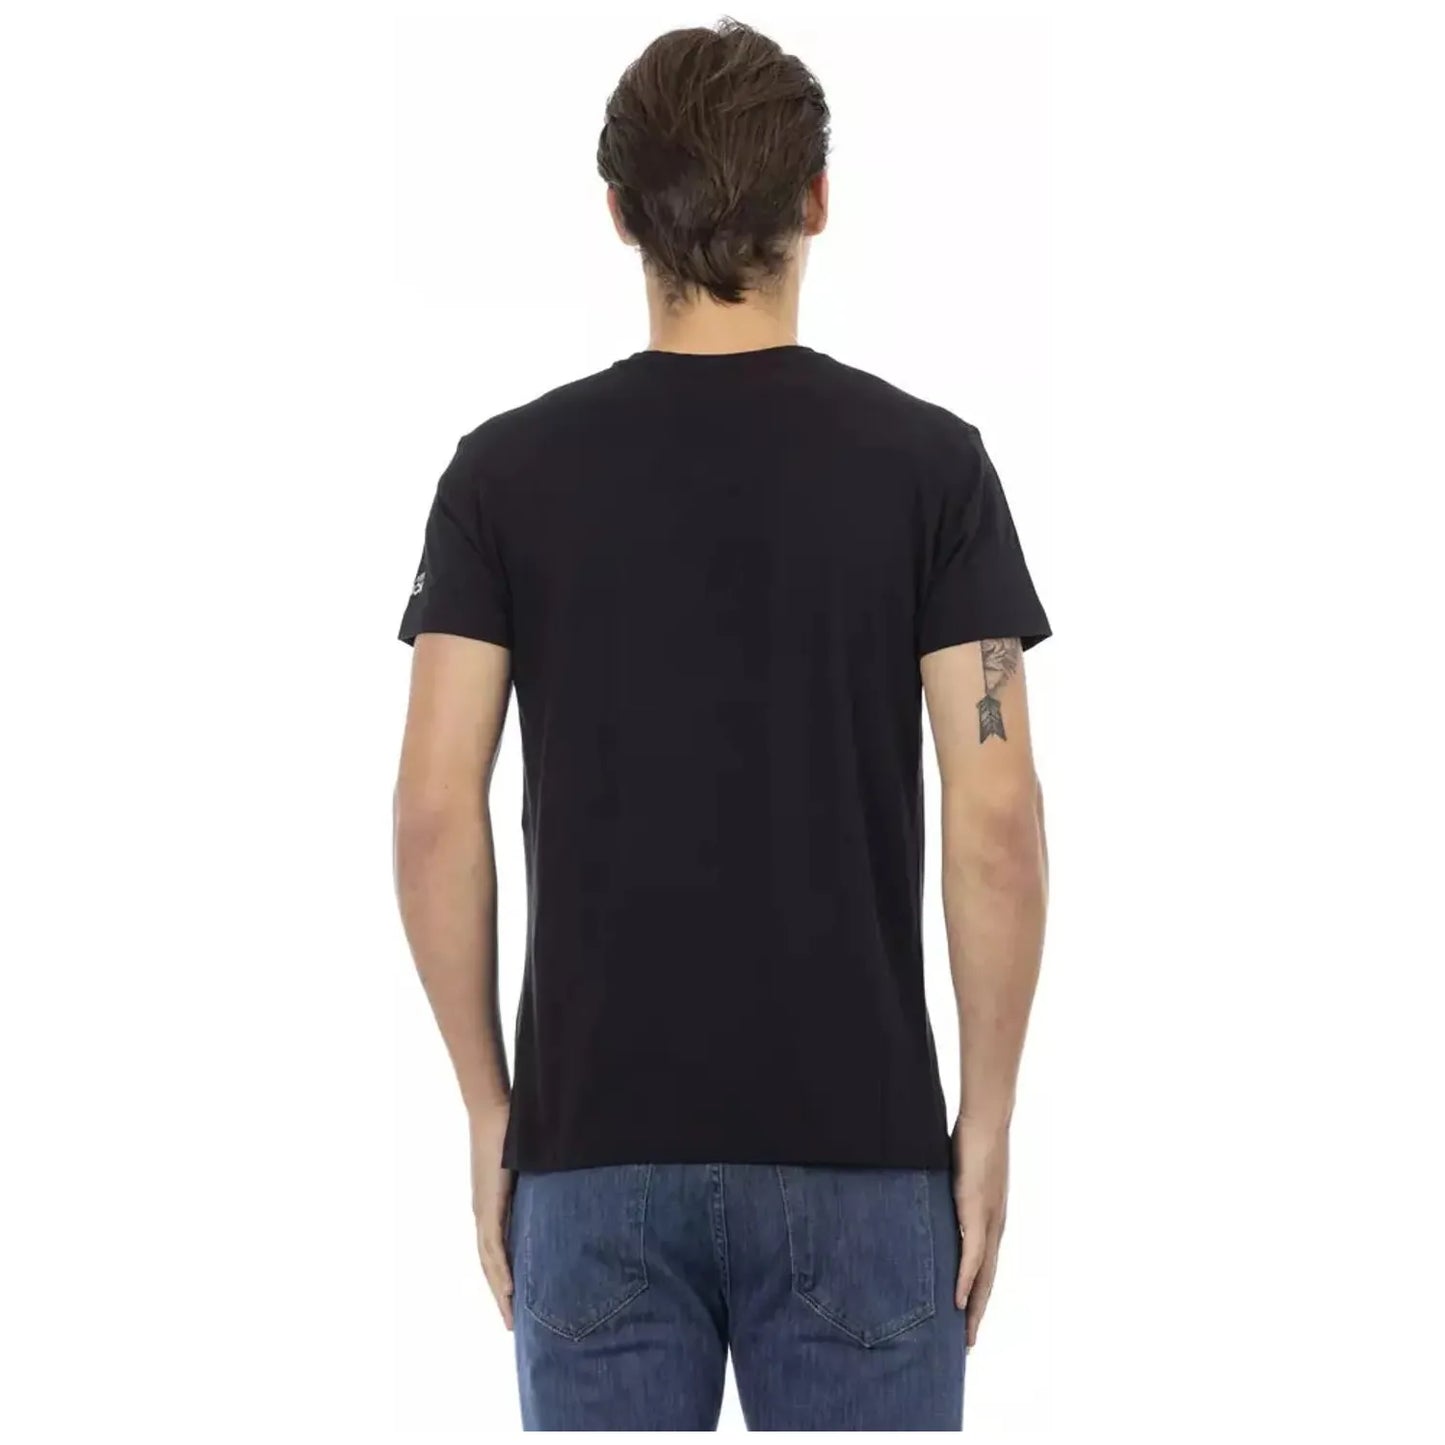 Trussardi Action Elegant V-Neck Tee with Chic Front Print black-cotton-t-shirt-22